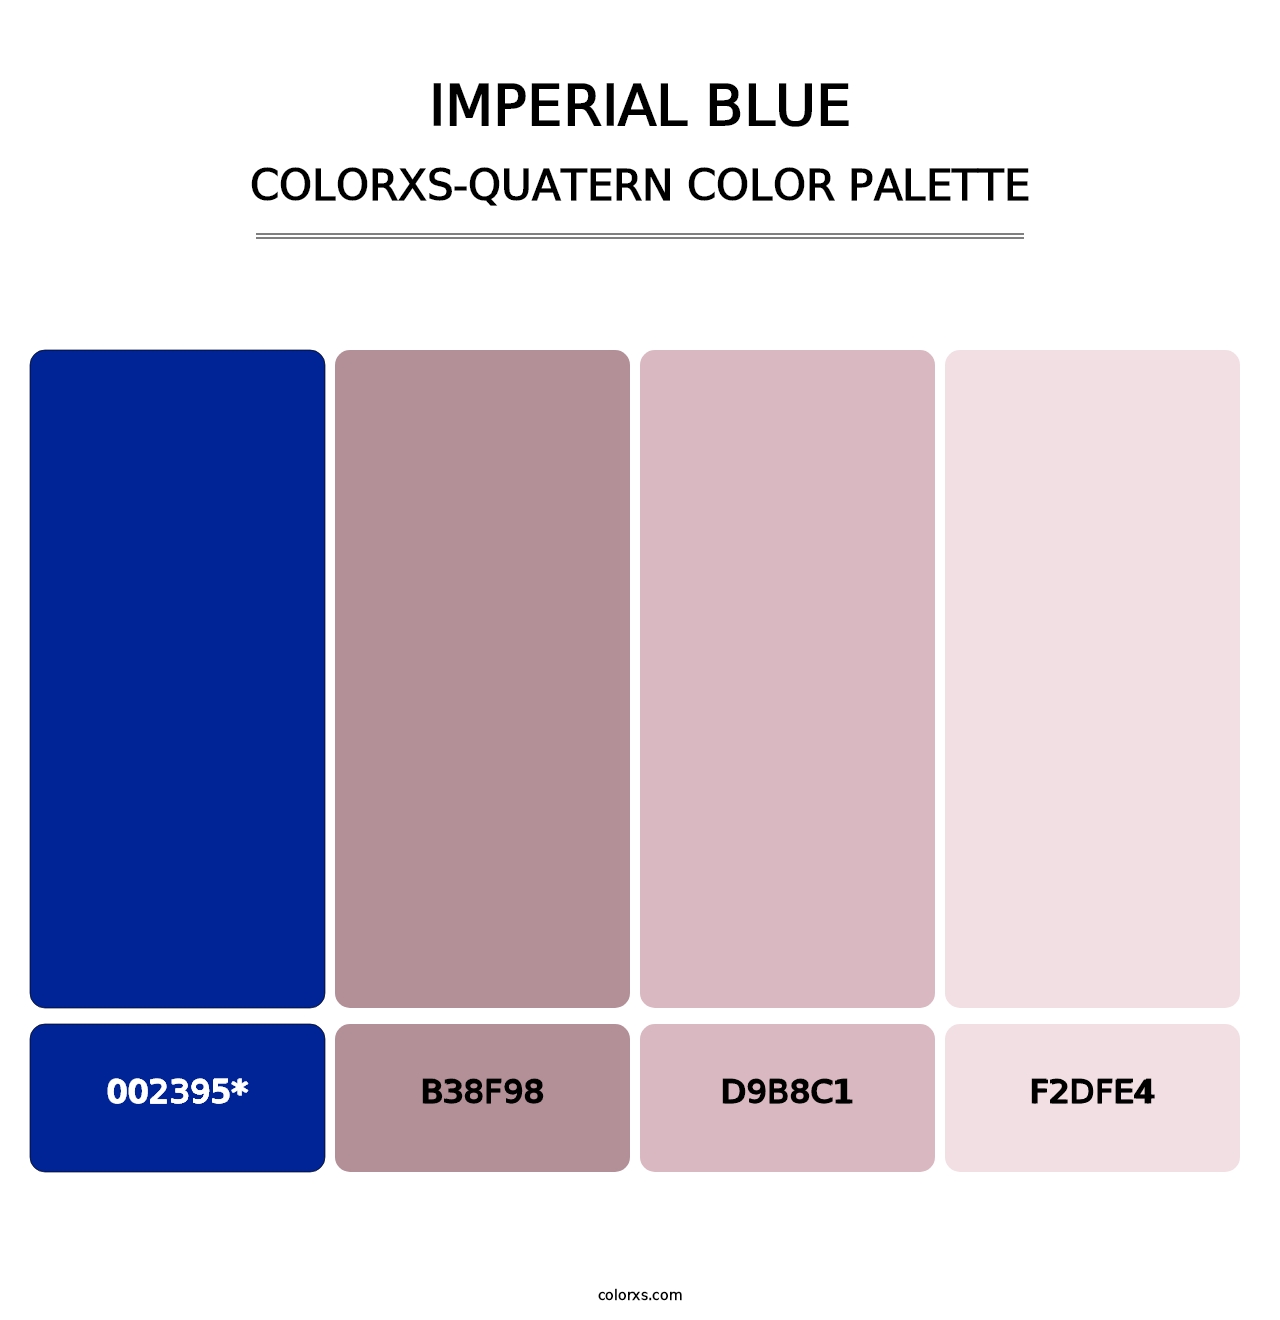 Imperial Blue - Colorxs Quatern Palette